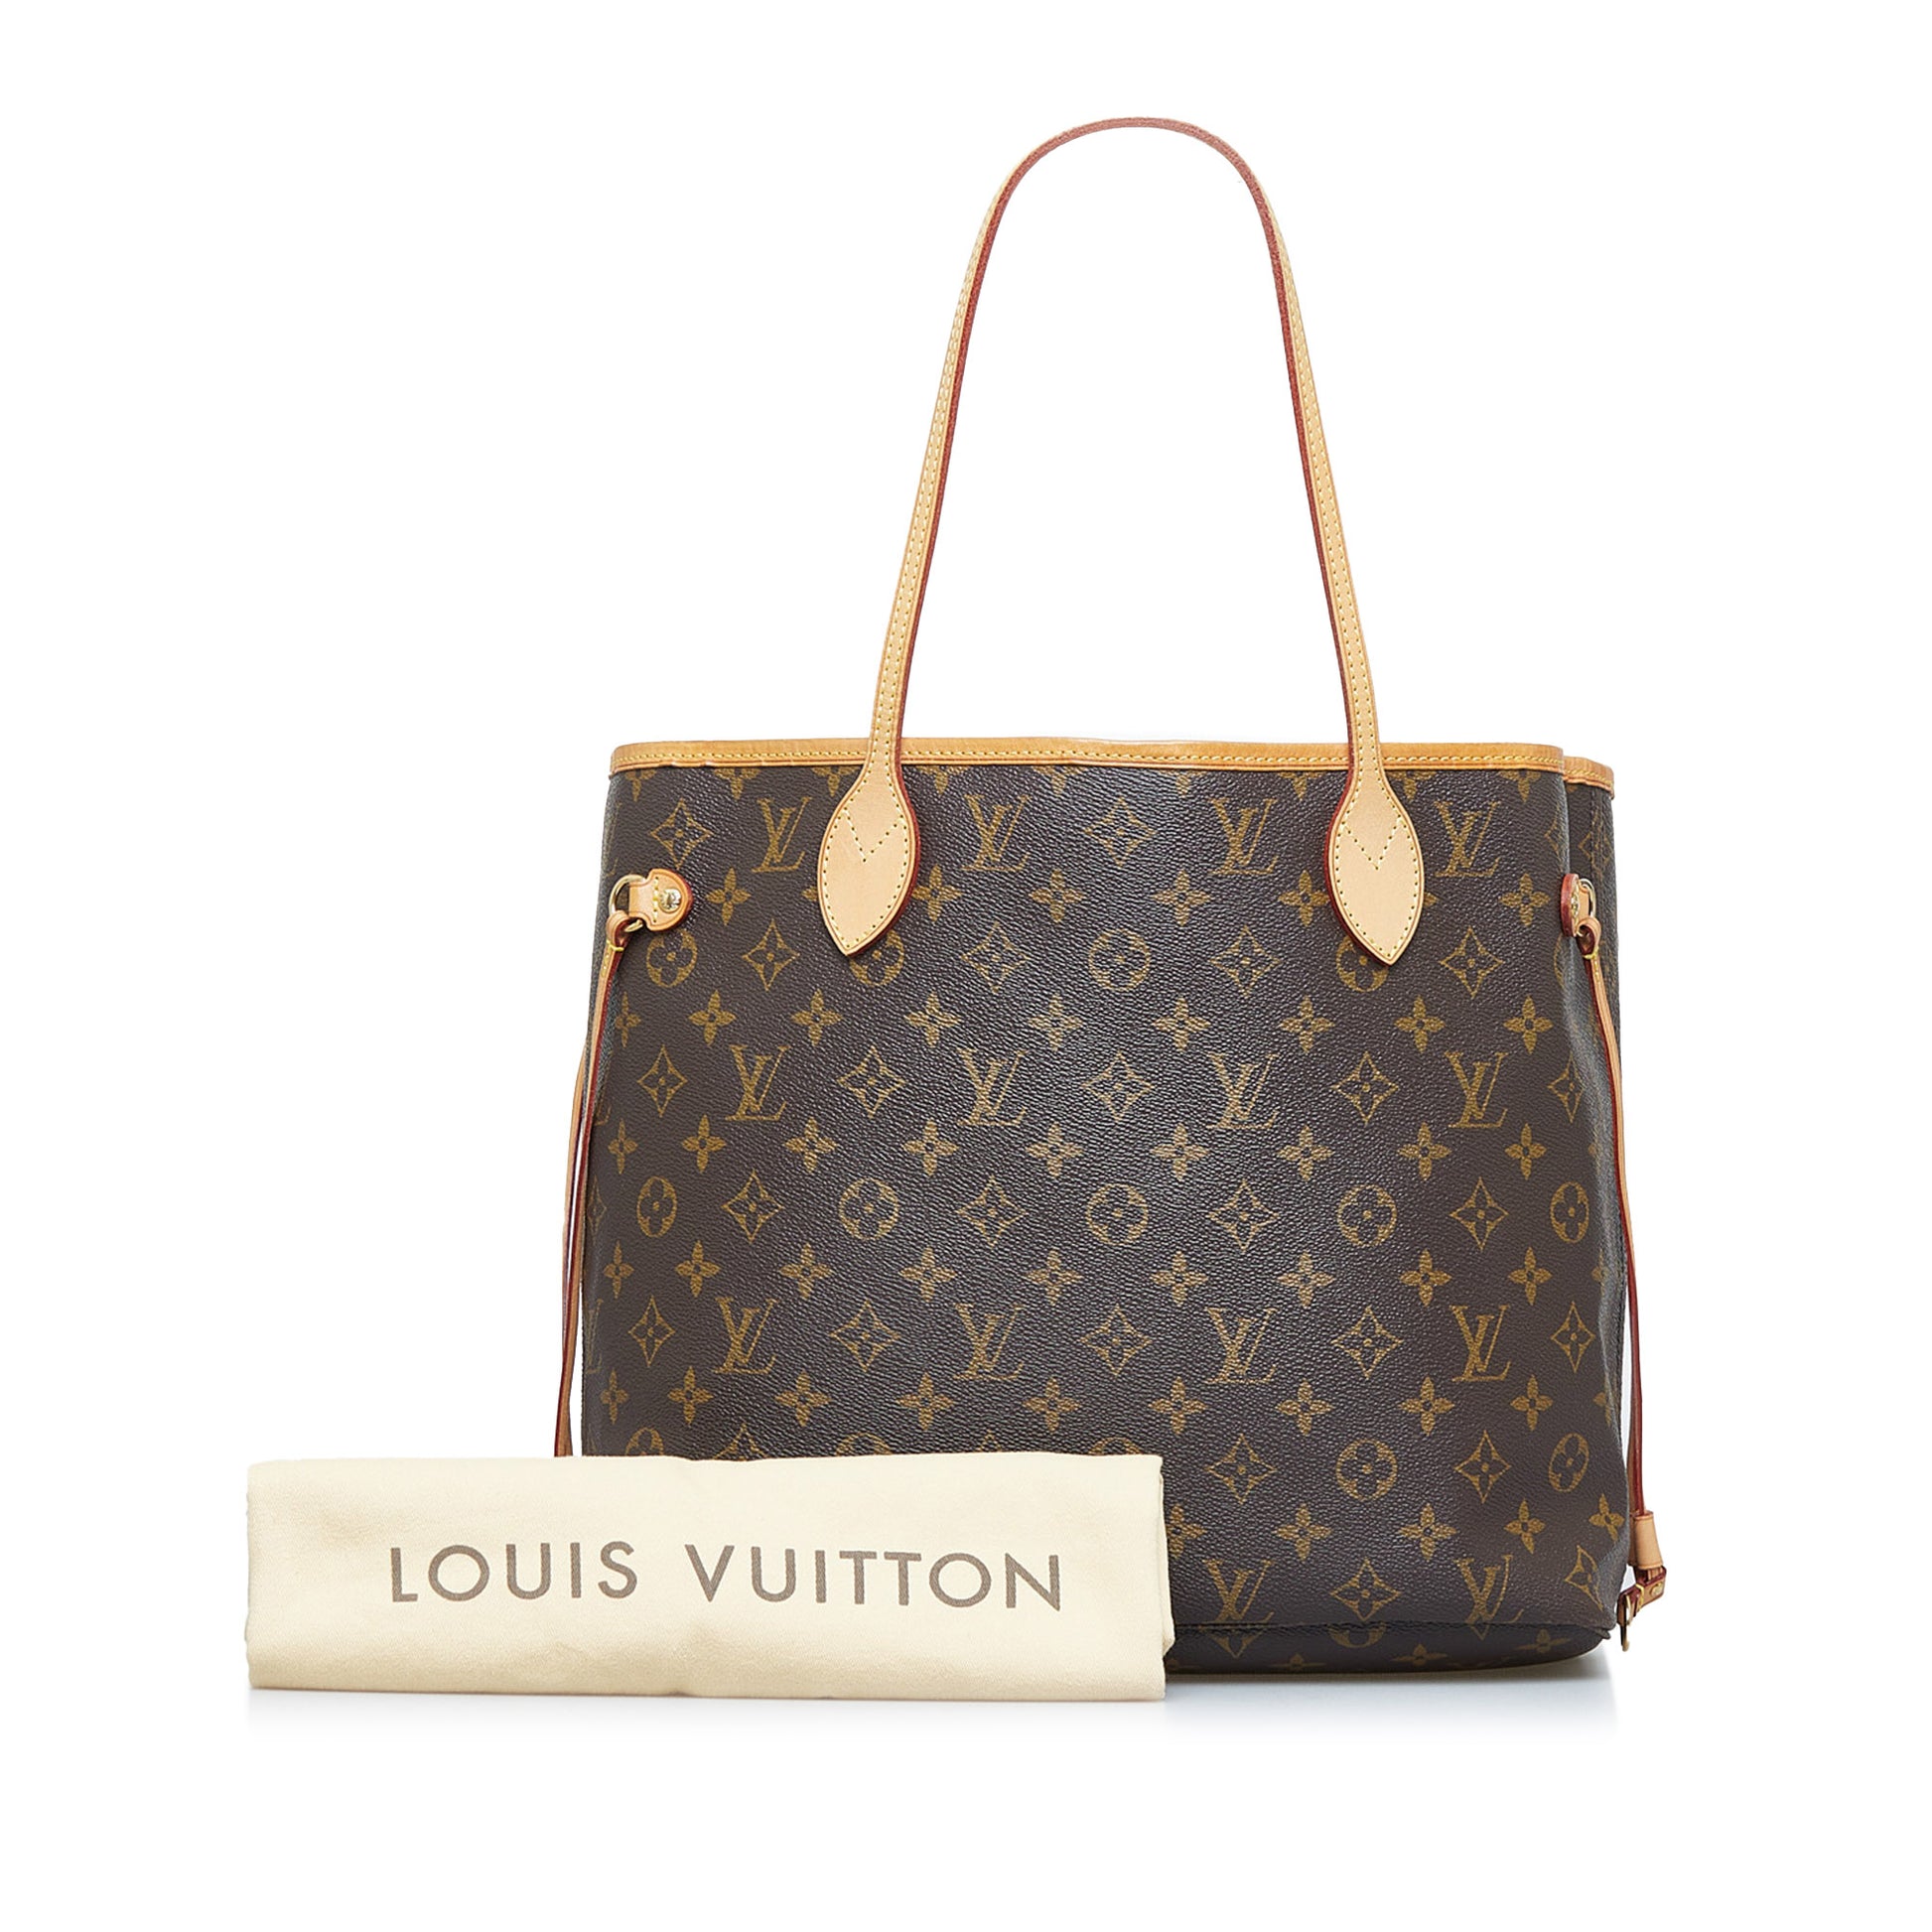 Louis Vuitton Neverfull MM Damier Azur W/Insert Handbag Tote